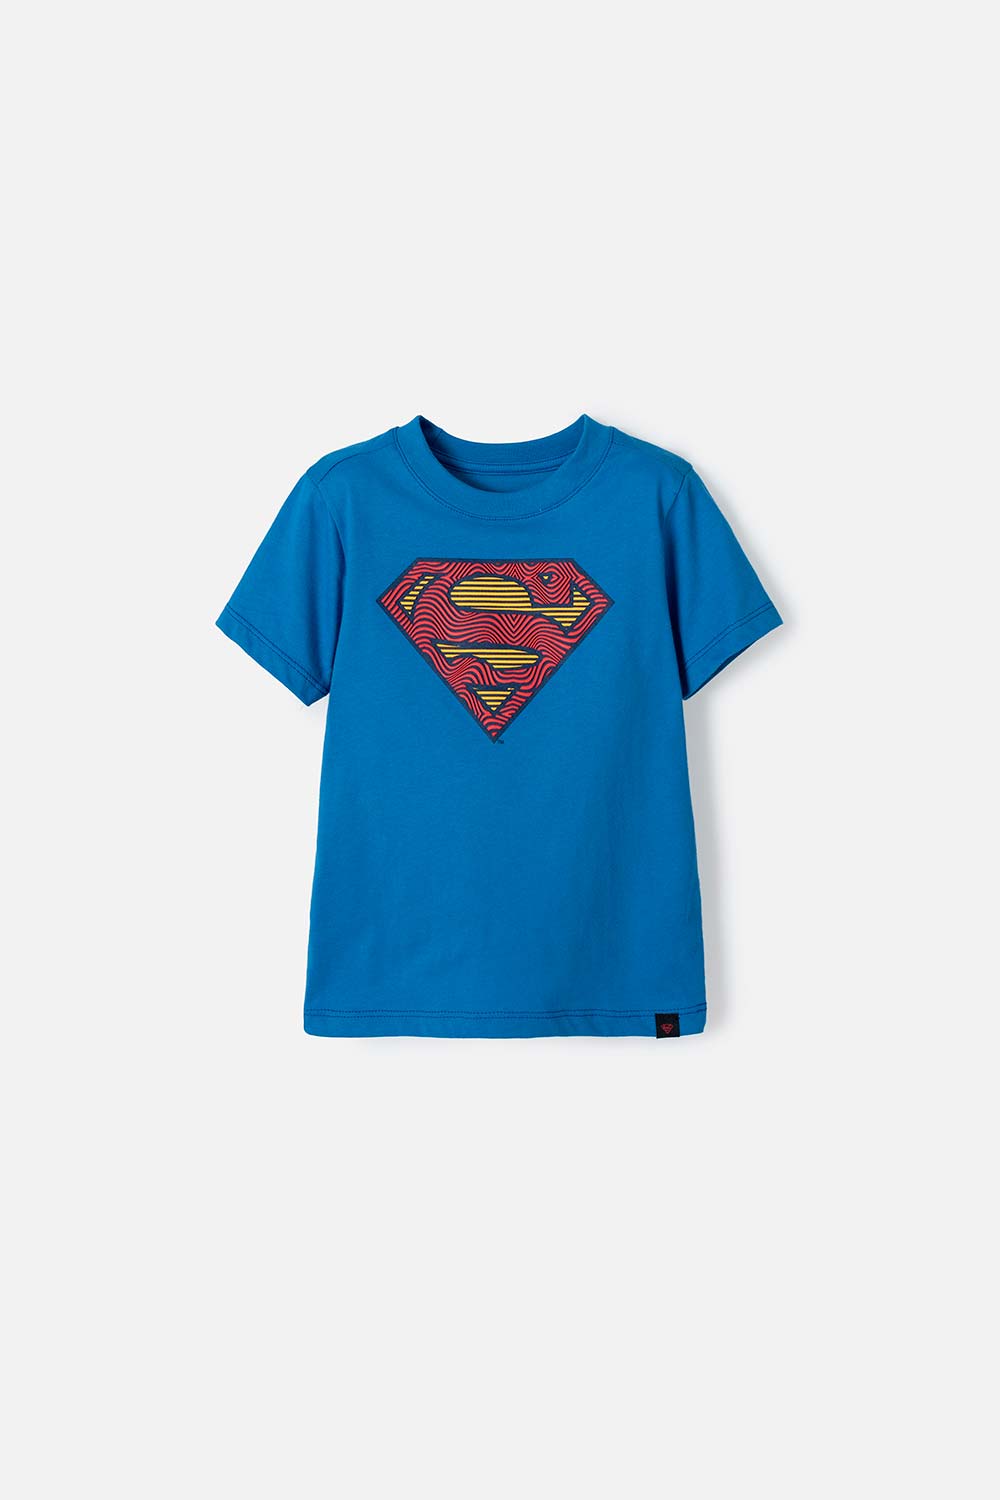 Camiseta  de Superman manga corta azul rey para niño 2t a 5t 2T-0